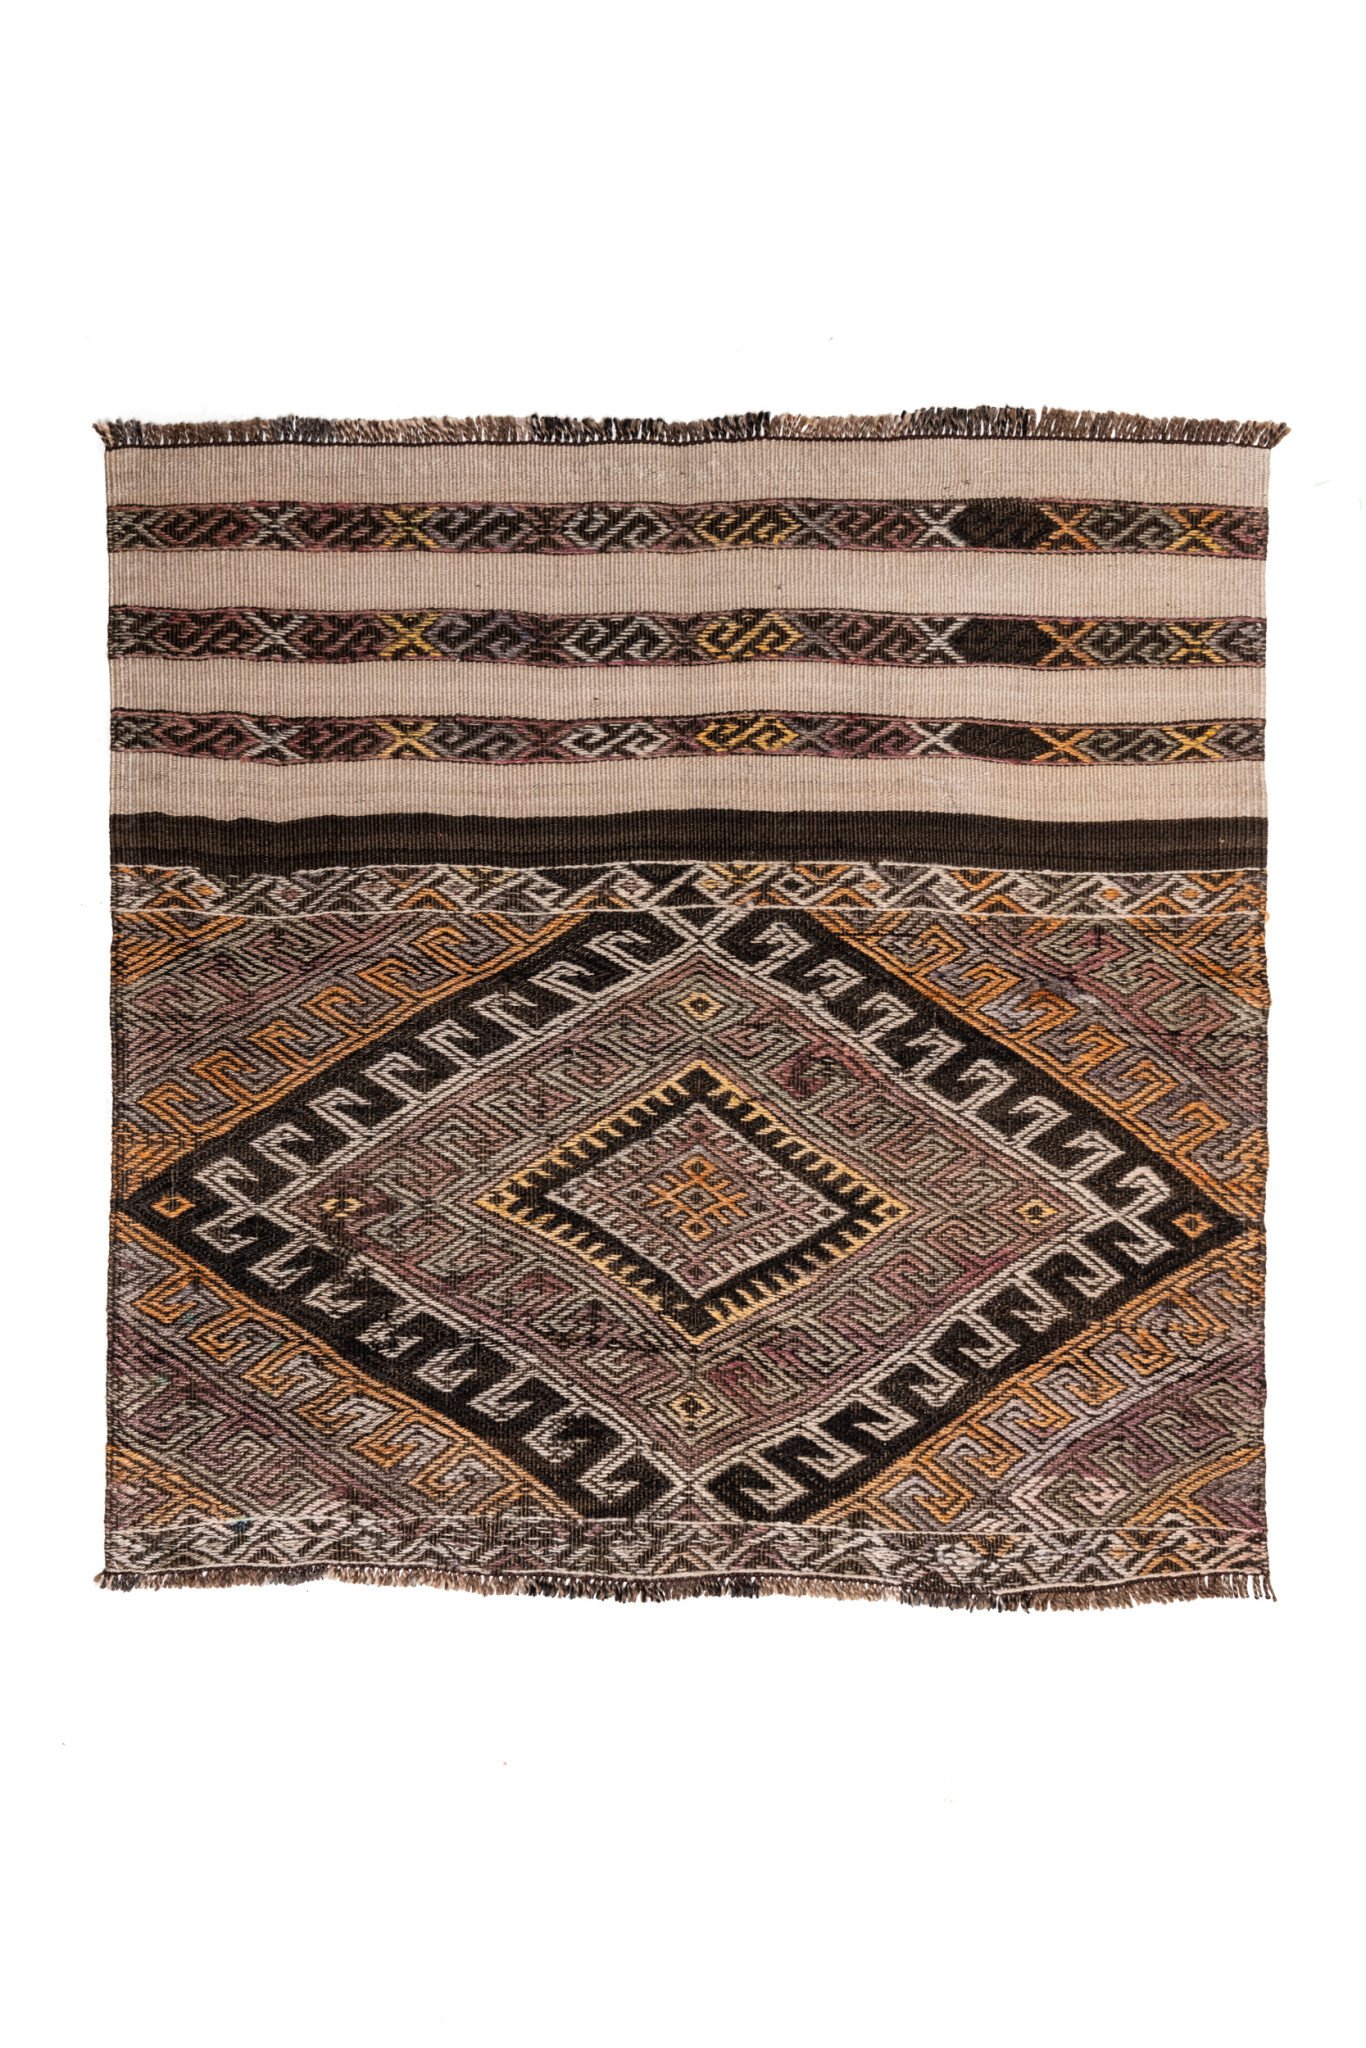 meten Slager Op risico Vintage kelim tapijt - 83cm - Turkije #1 • Couleur Locale